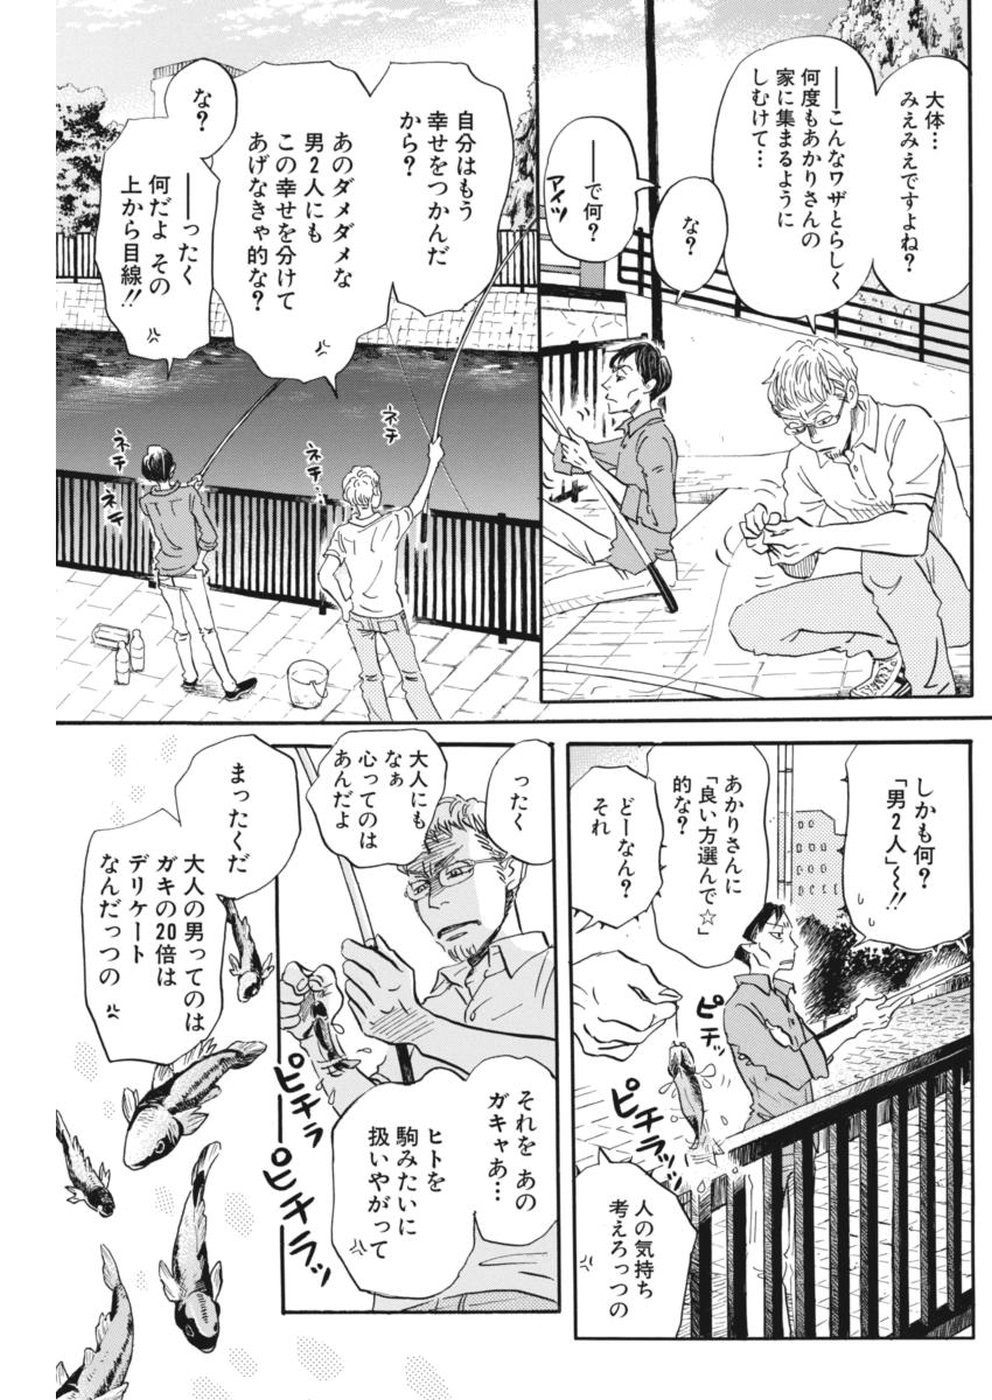 3 Gatsu no Lion - Chapter 144 - Page 9